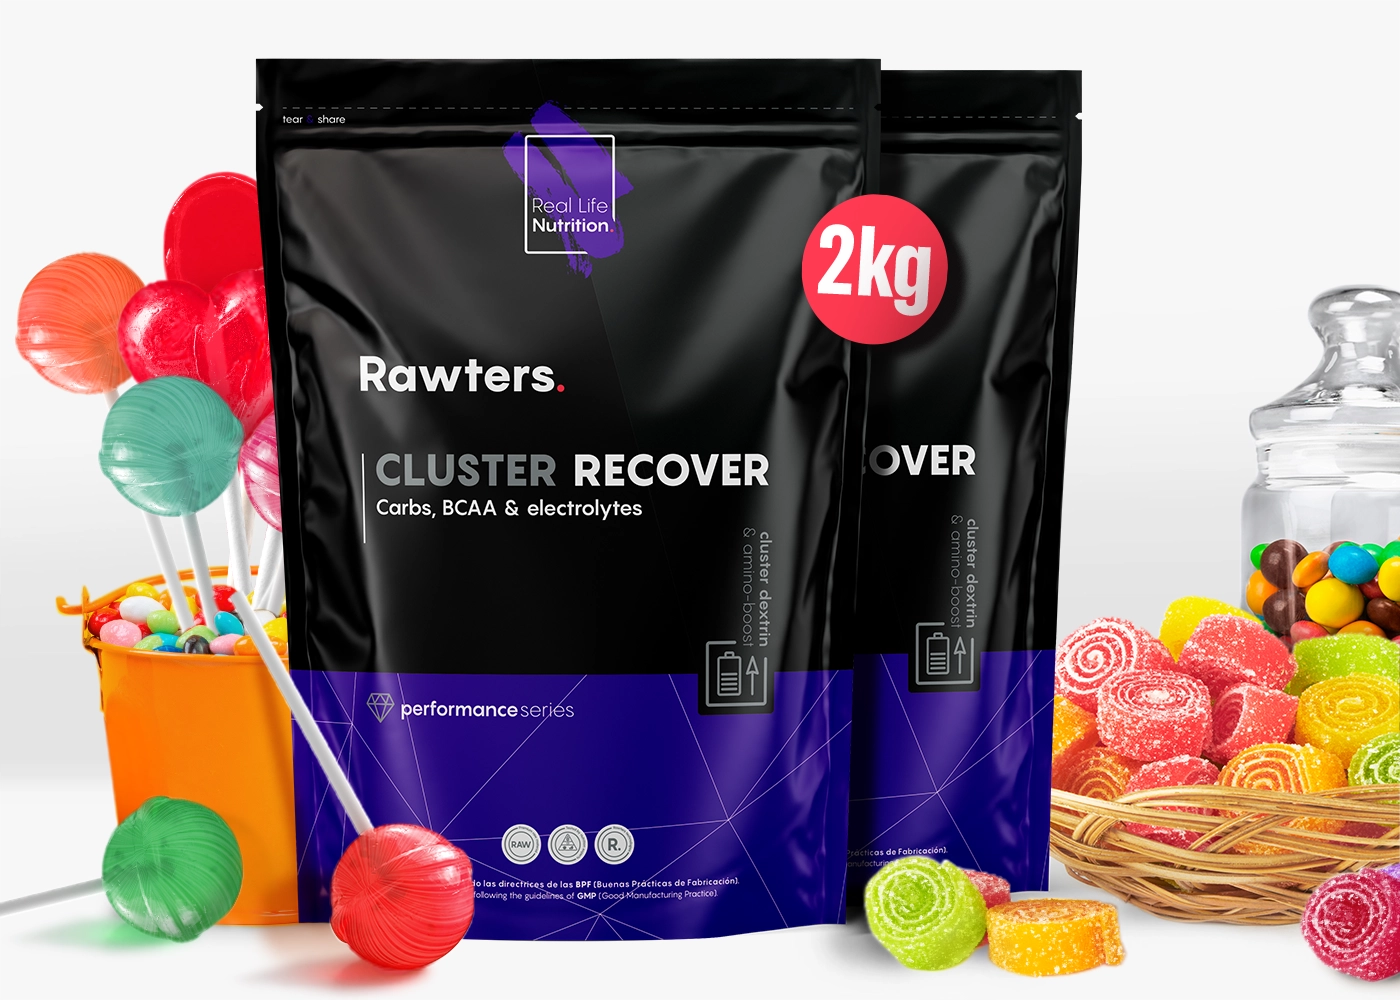 Rawters product